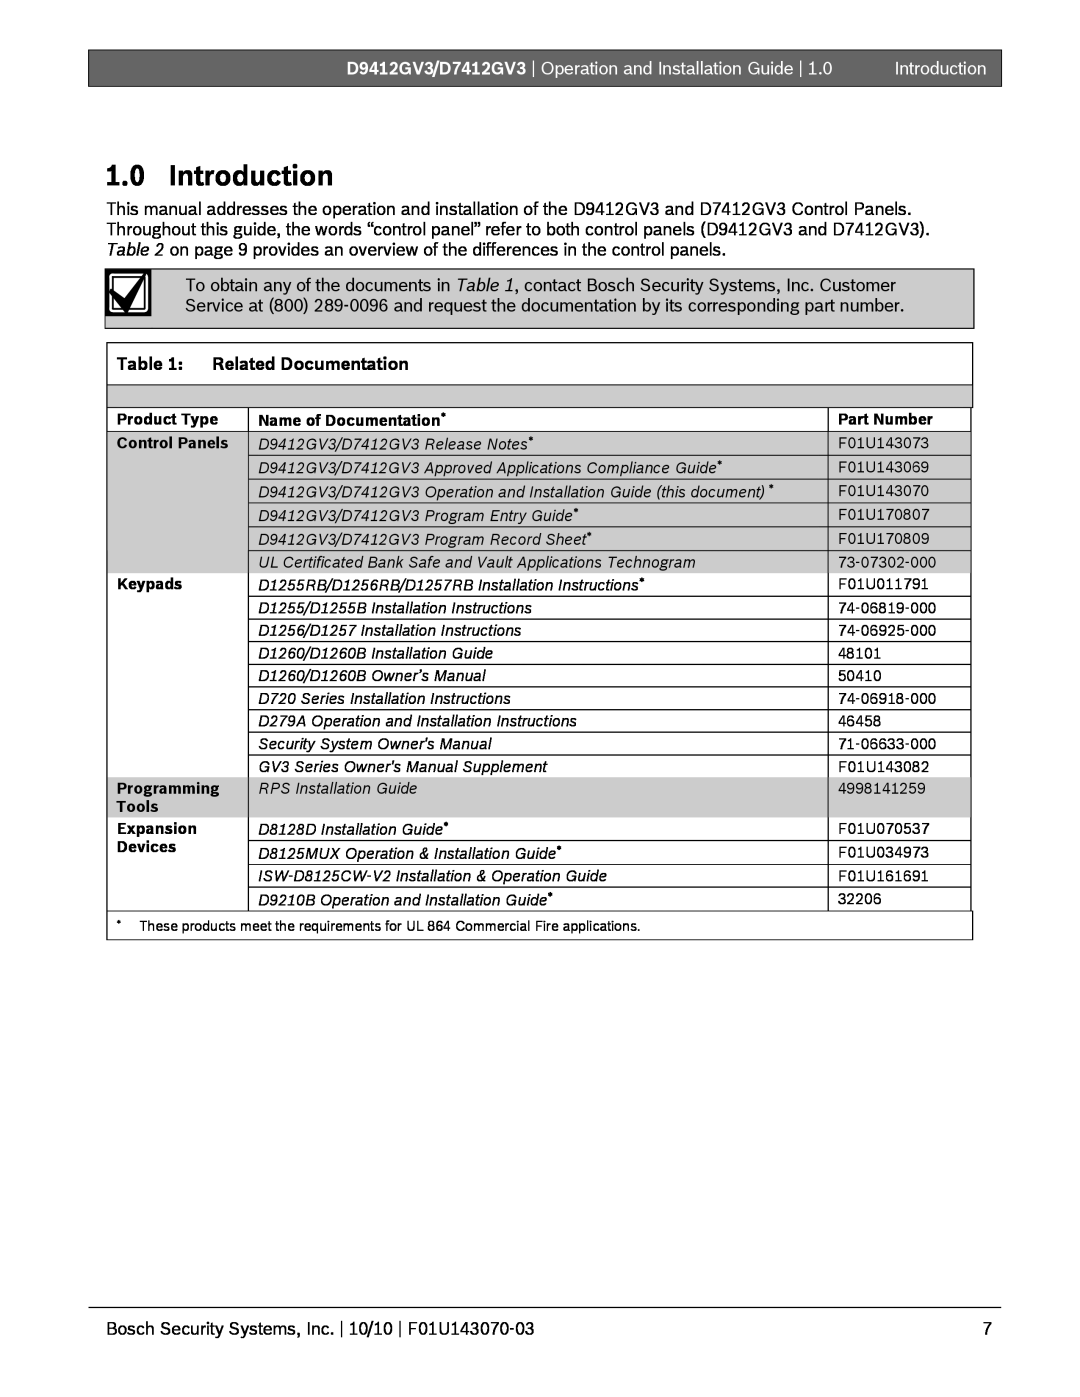 Bosch Appliances D7412GV3, D9412GV3 manual Introduction, Related Documentation 